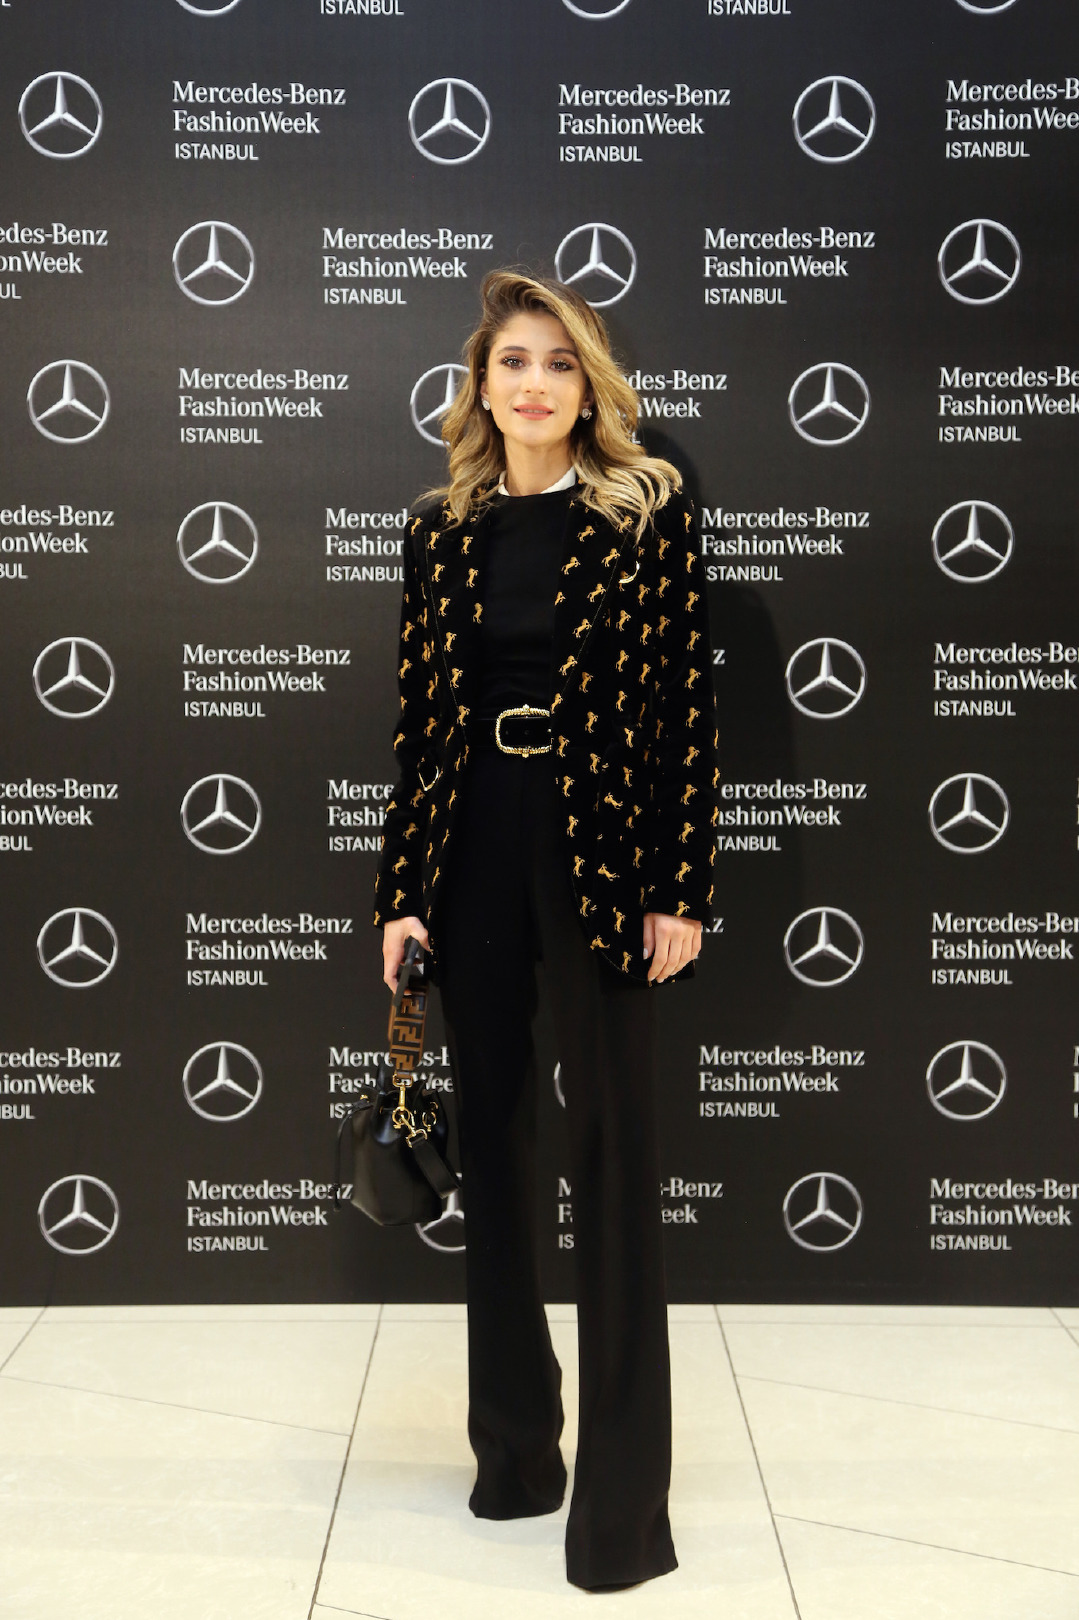 Mercedes-Benz Fashion Week Istanbul Kick-Off Daveti